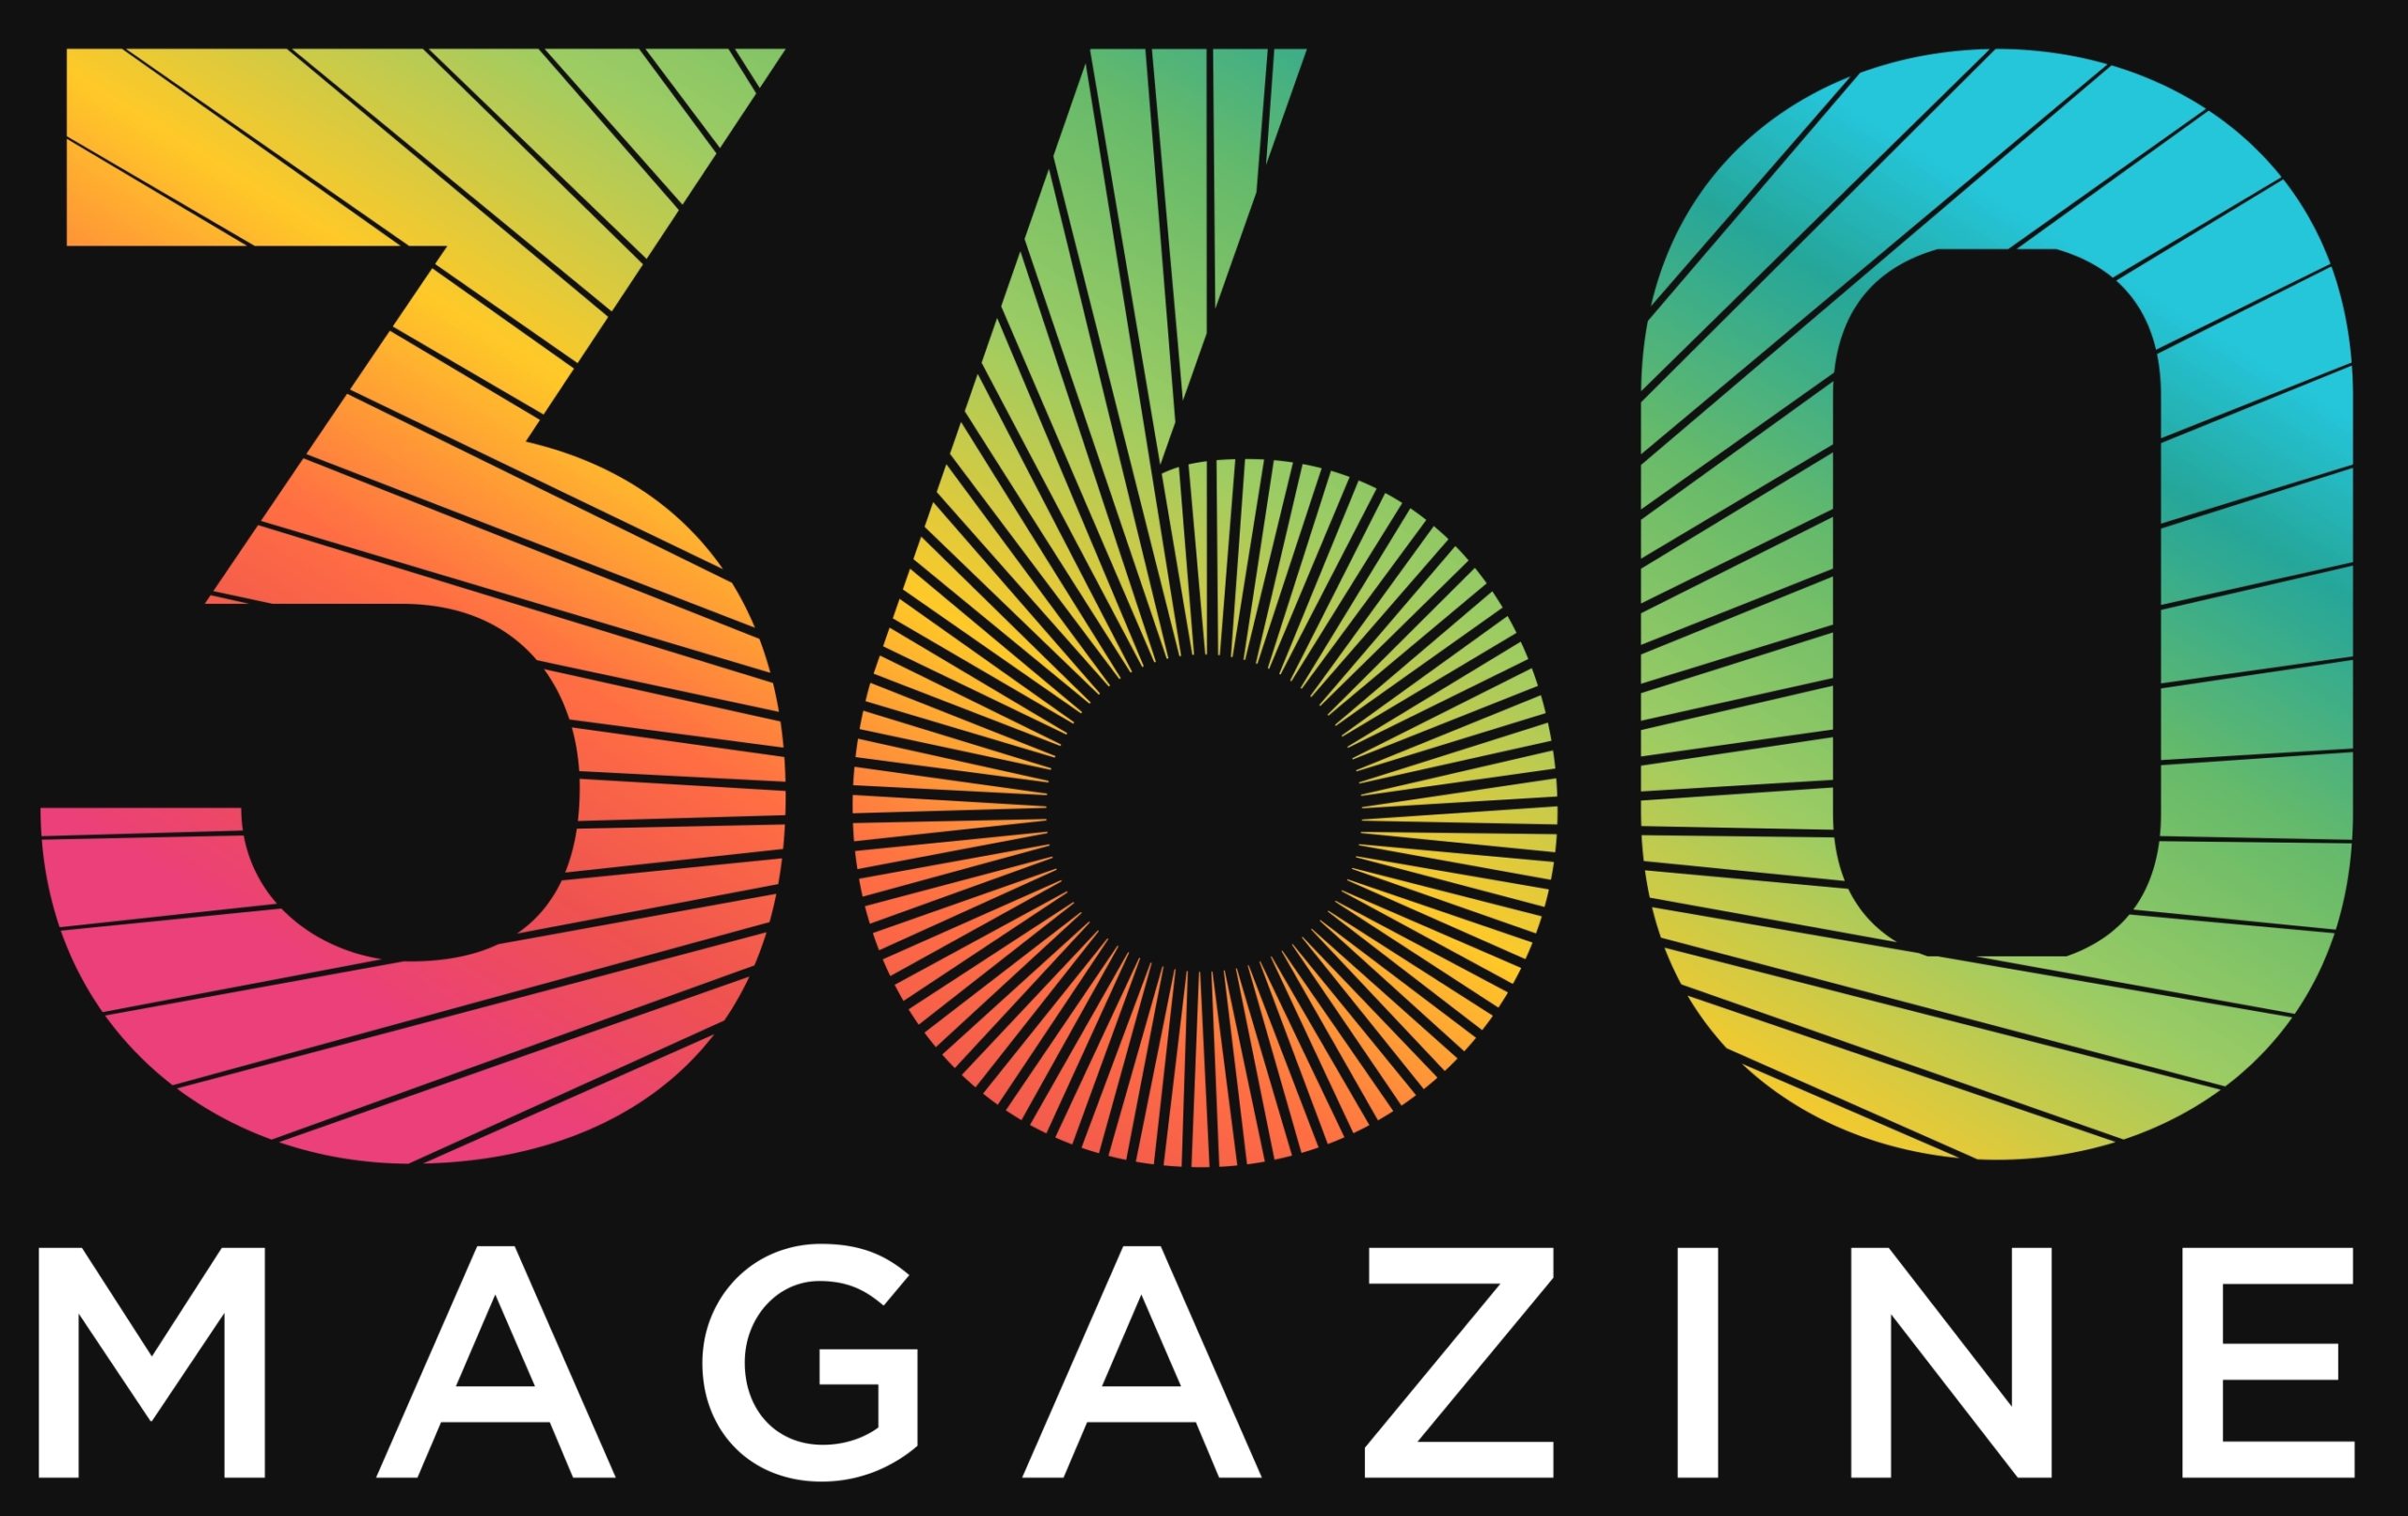 360 magazine